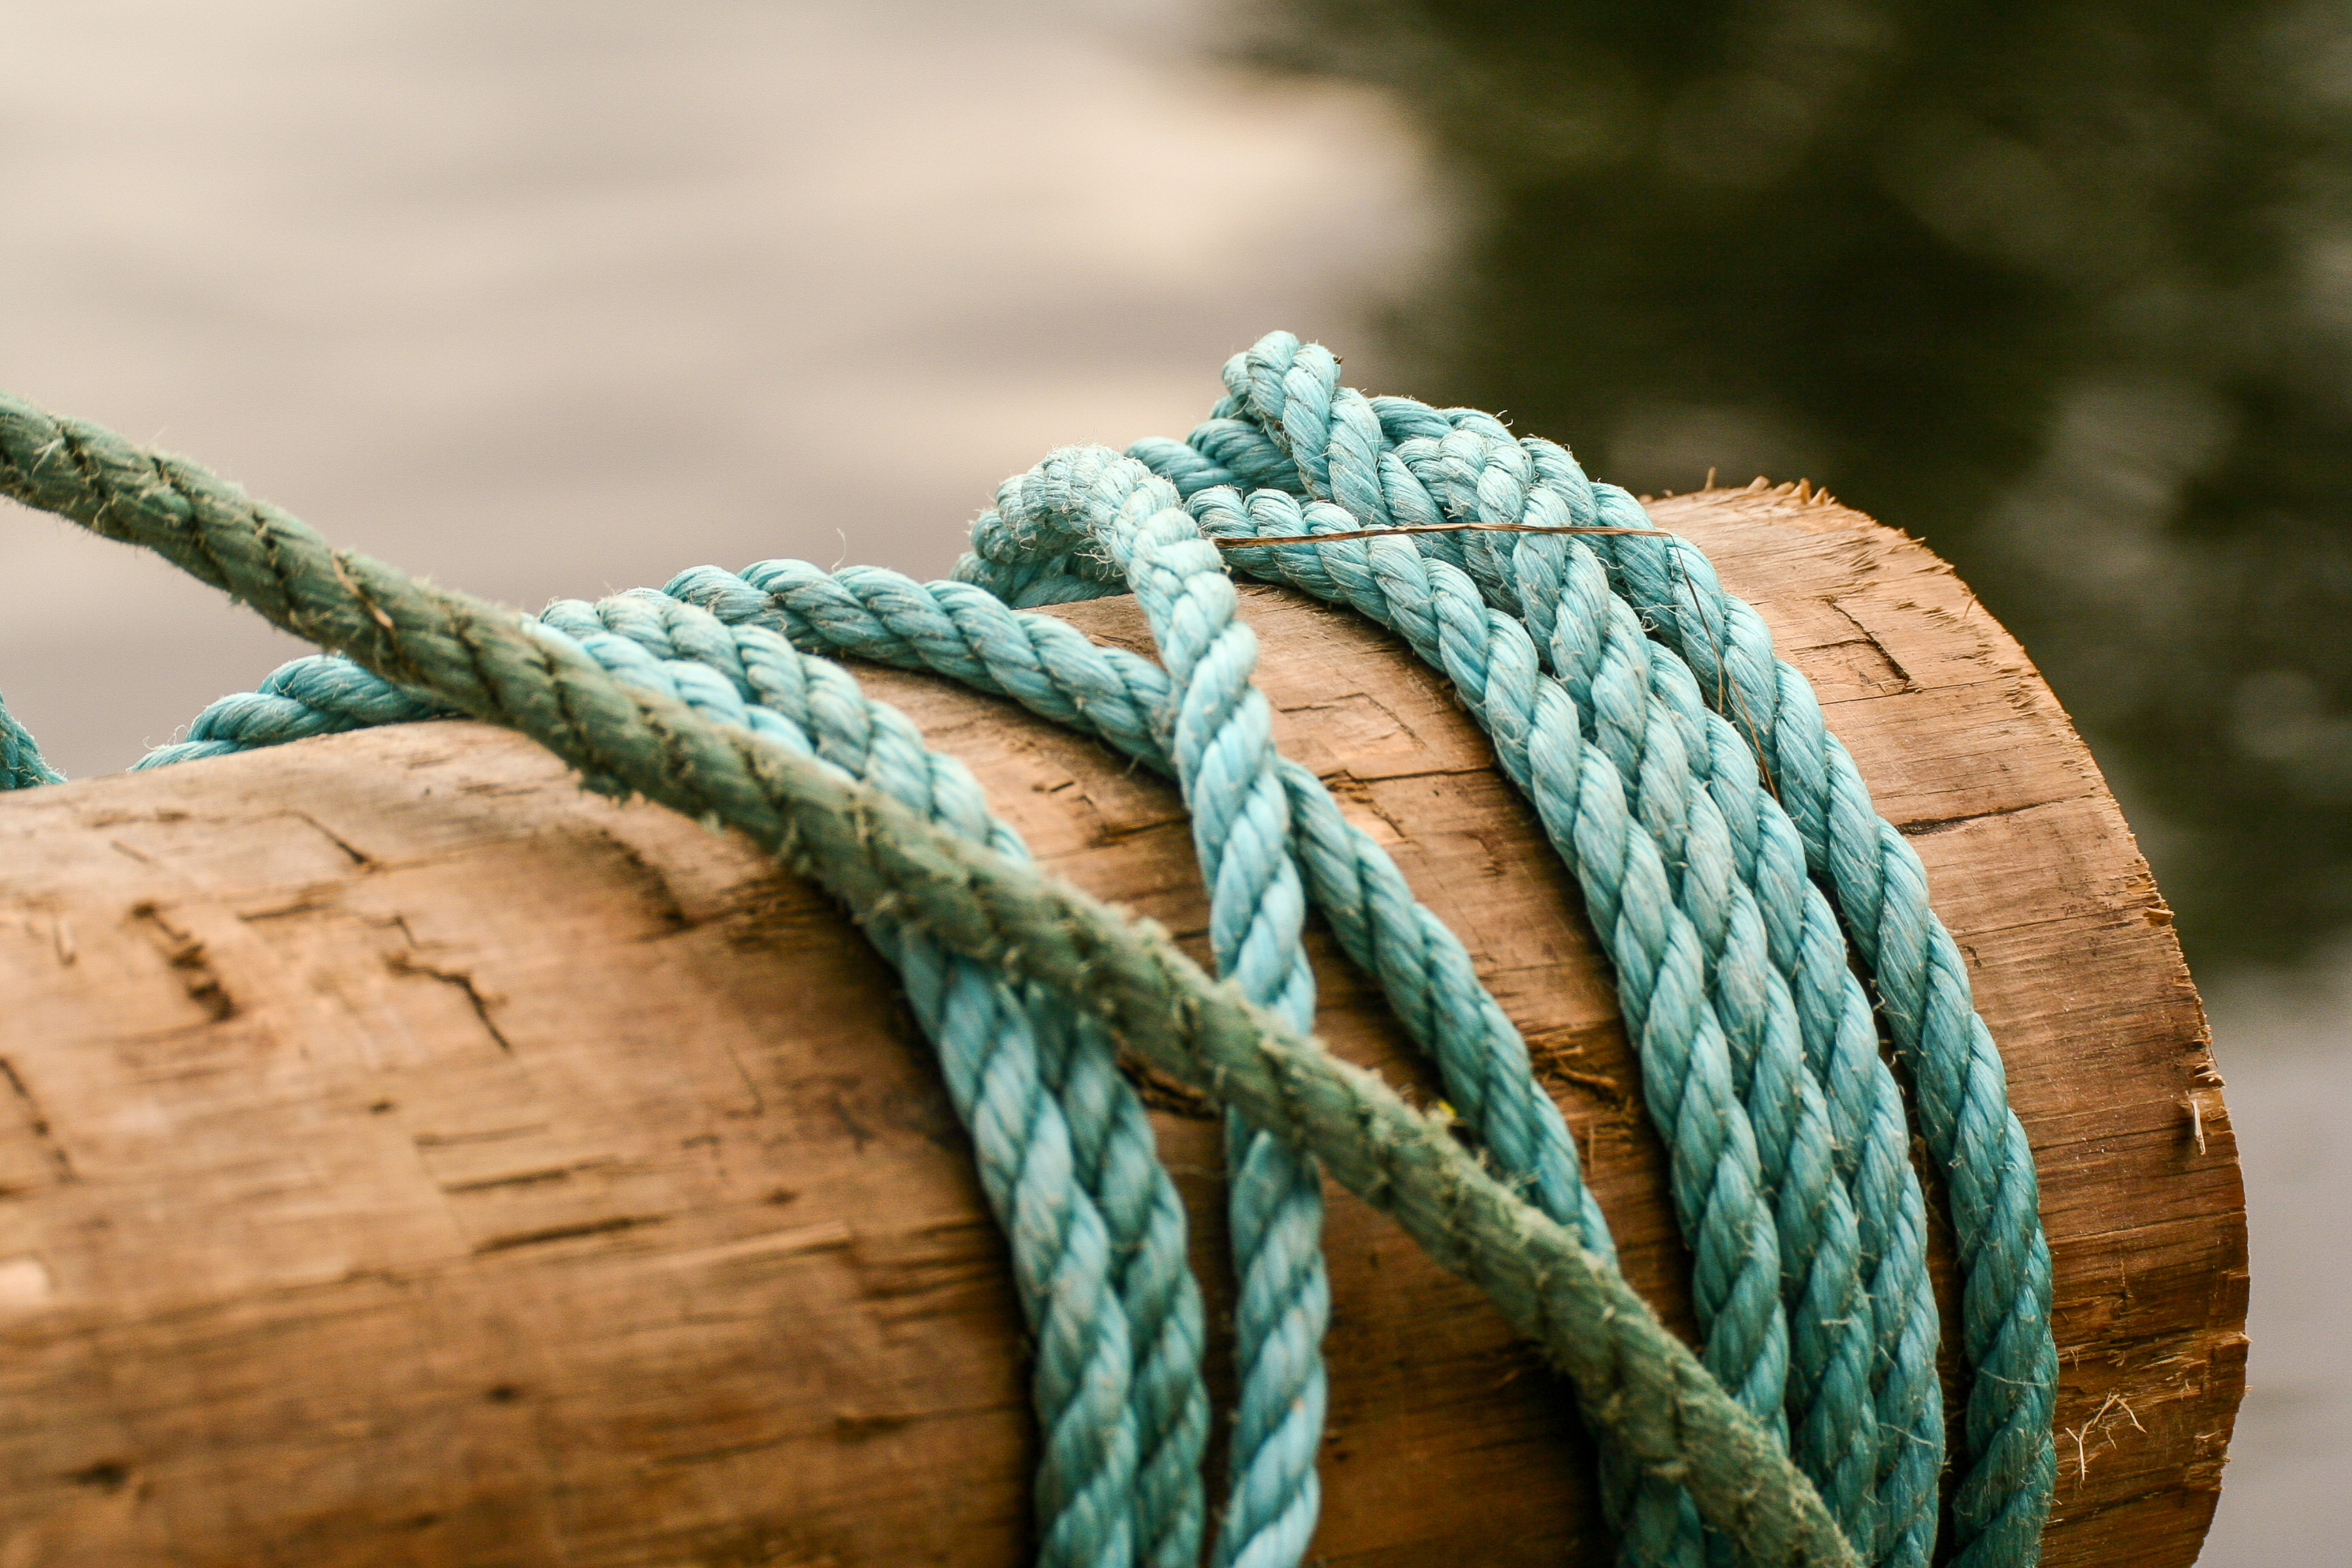 Knot on a wooden beam. | Source: Shutterstock